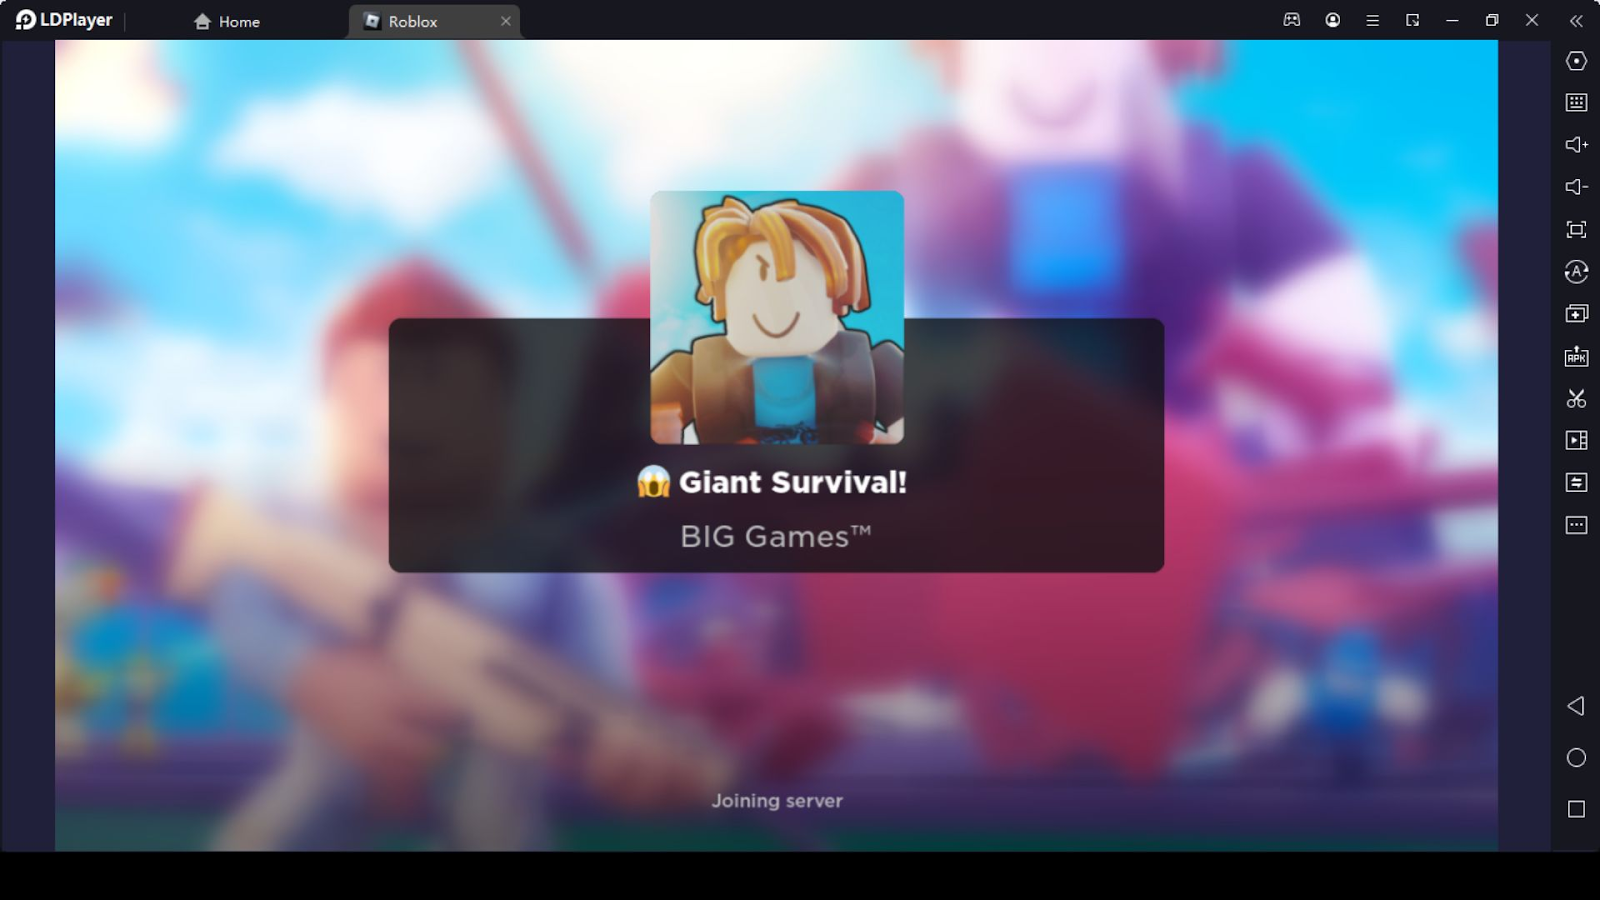 Giant Survival!